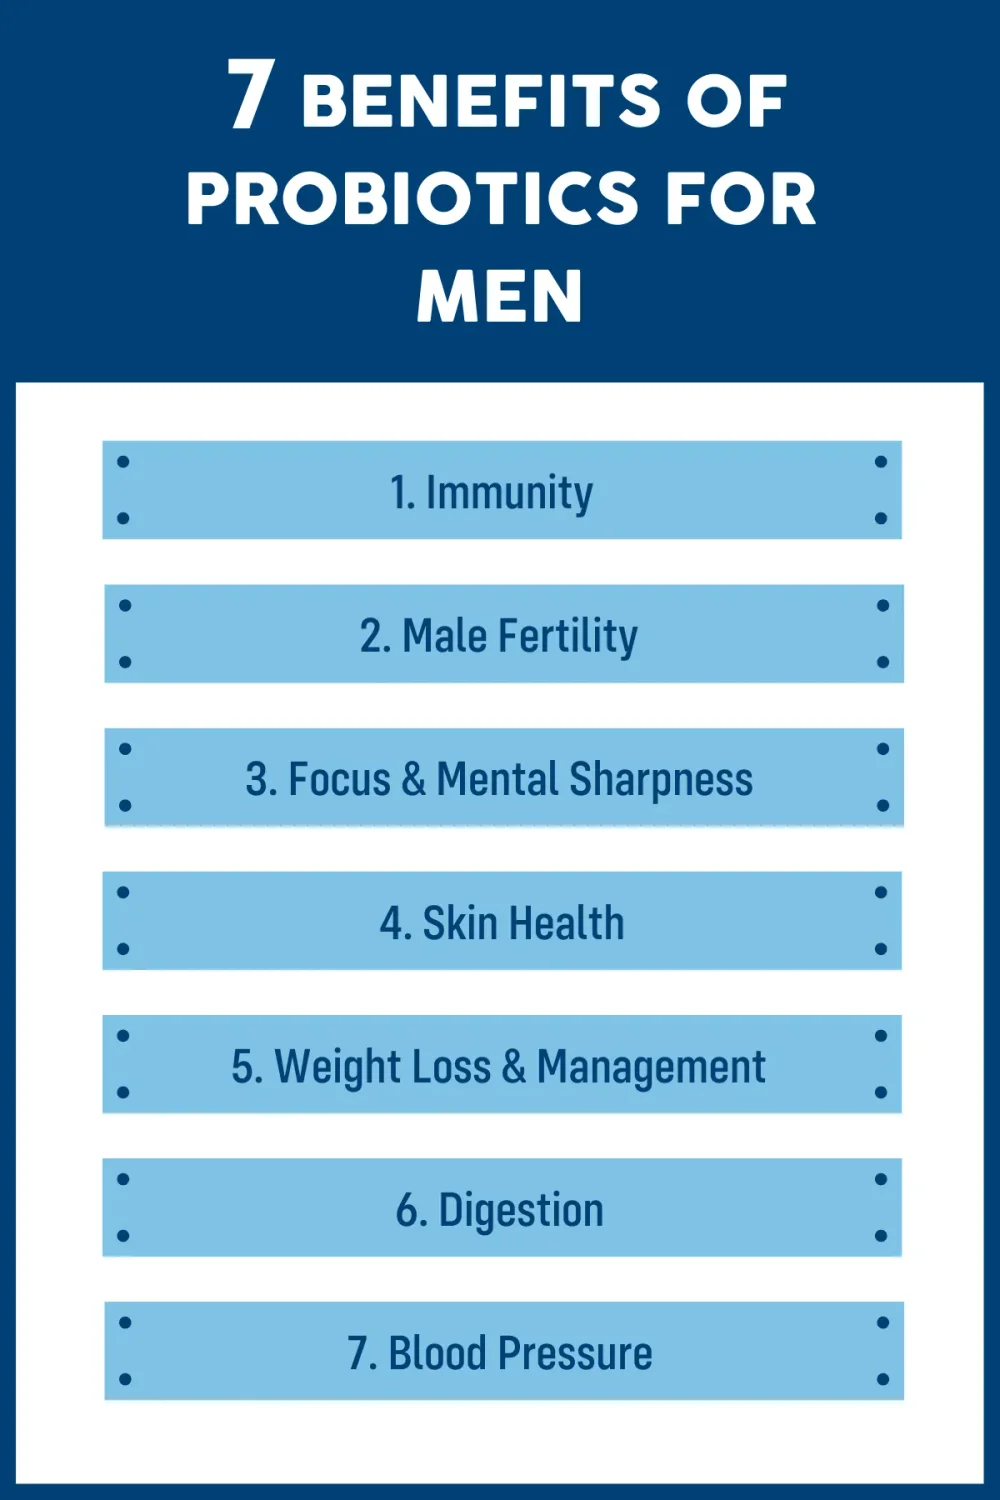 Infographic showing 7 benefits of probiotics for men.